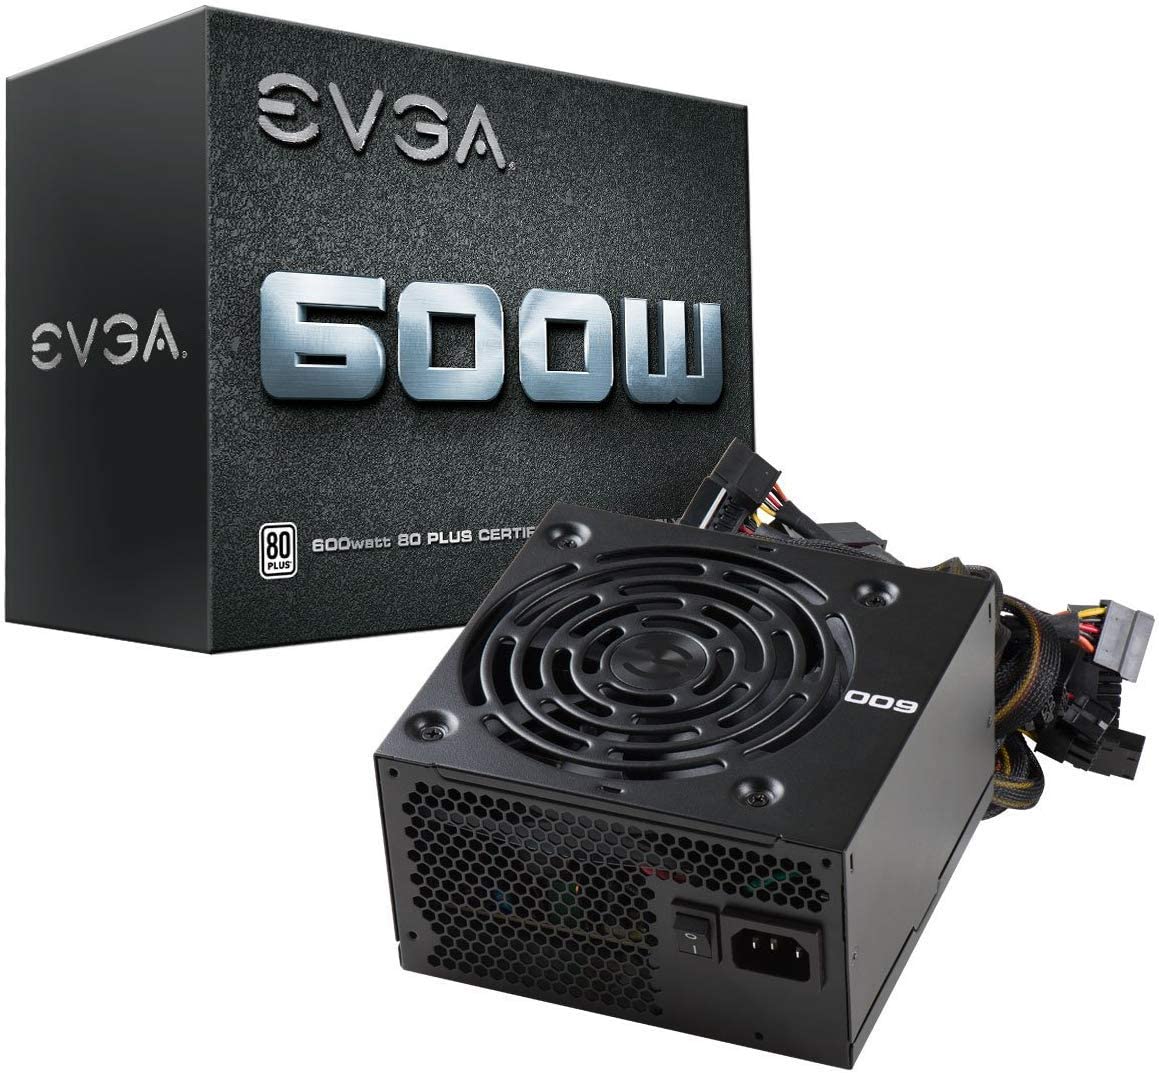 Power supply EVGA 600W